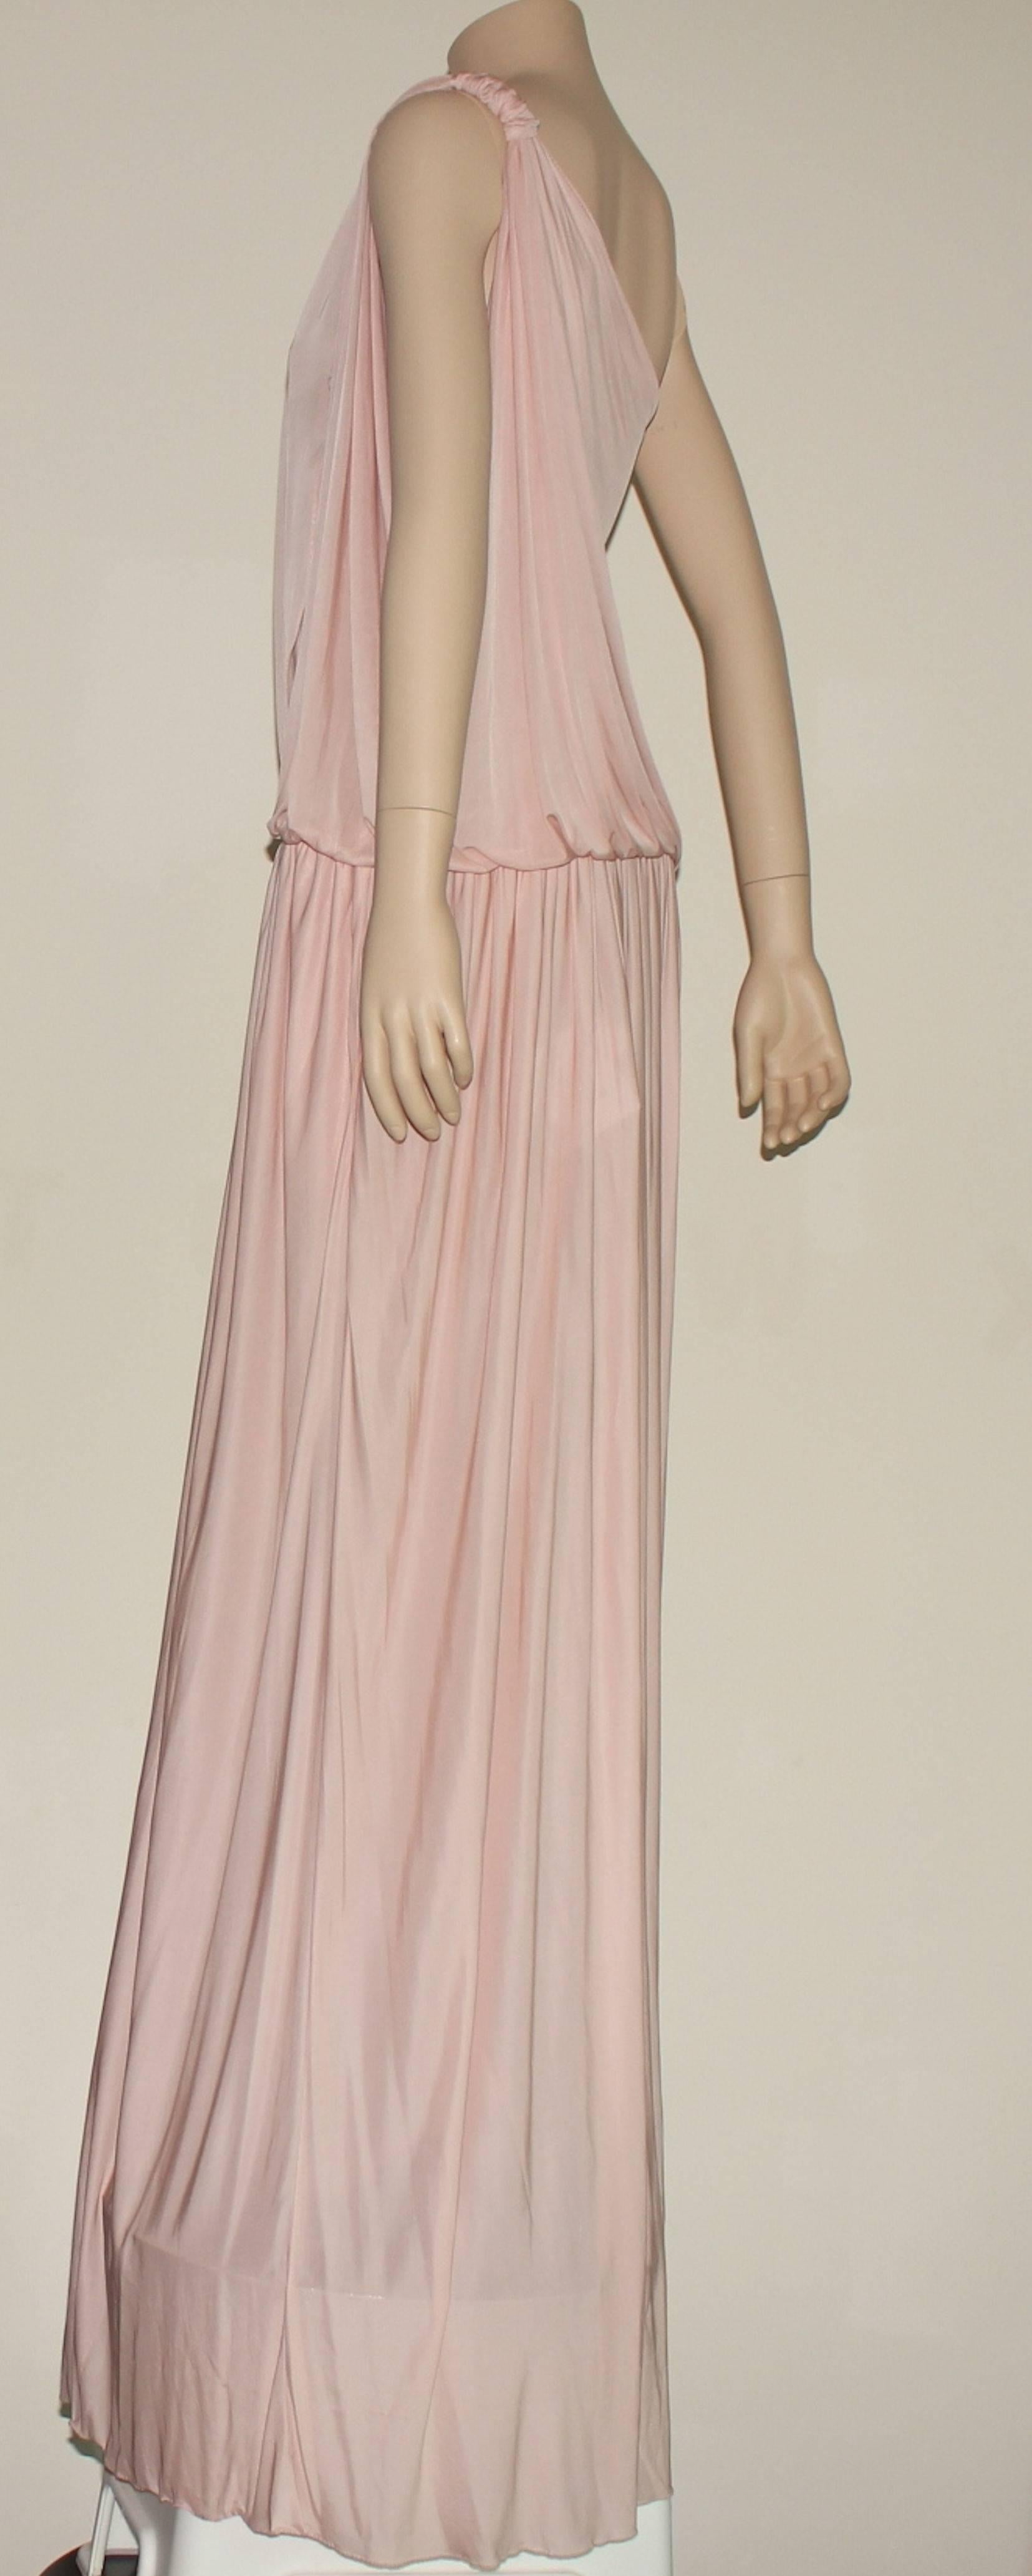 Beige Emilio Pucci Draped Evening Gown Maxi Dress